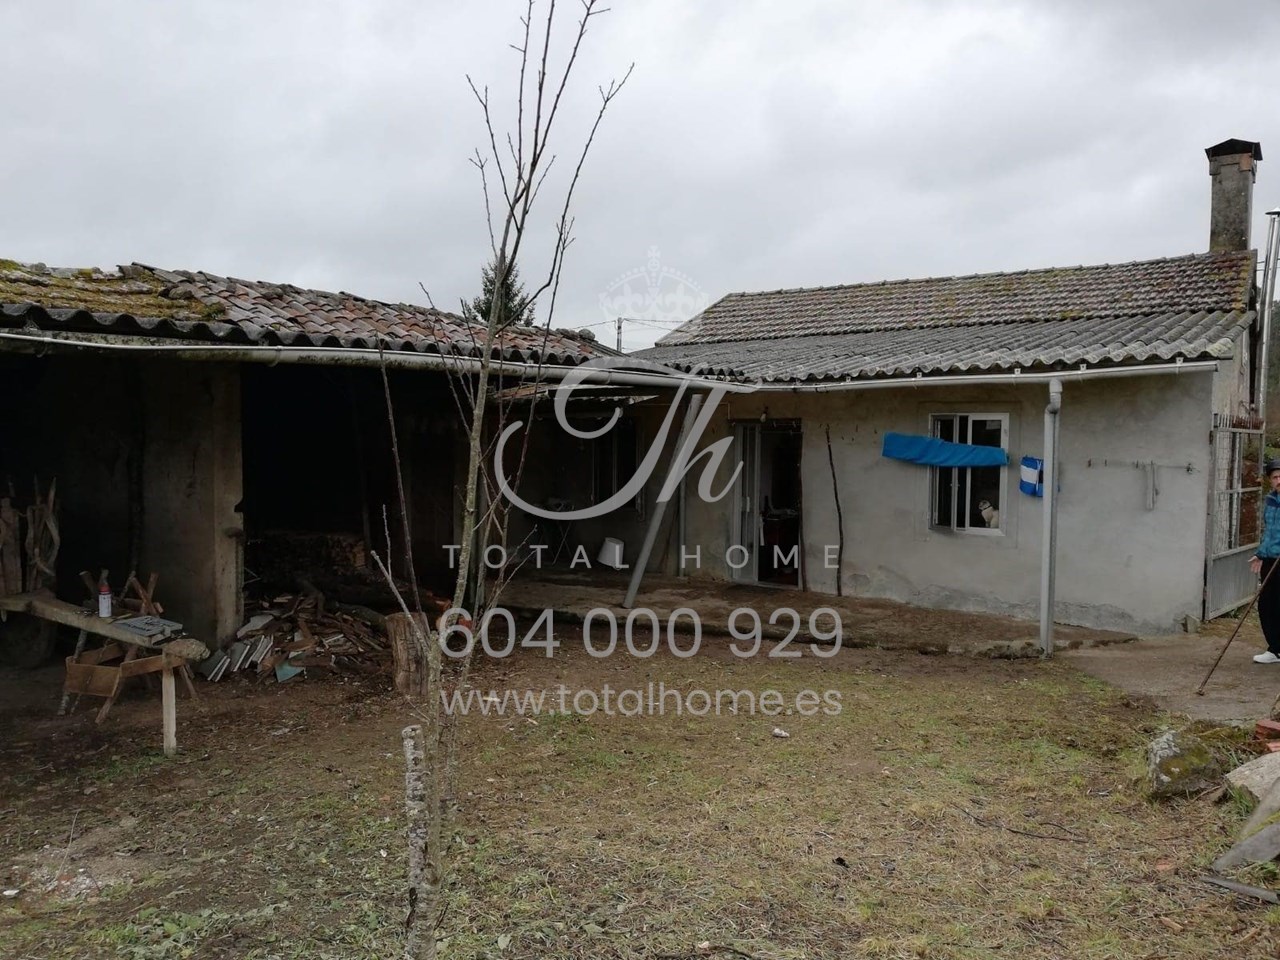 Foto 7 Total Home vende casa rural para restaurar en A Pedra - Teo